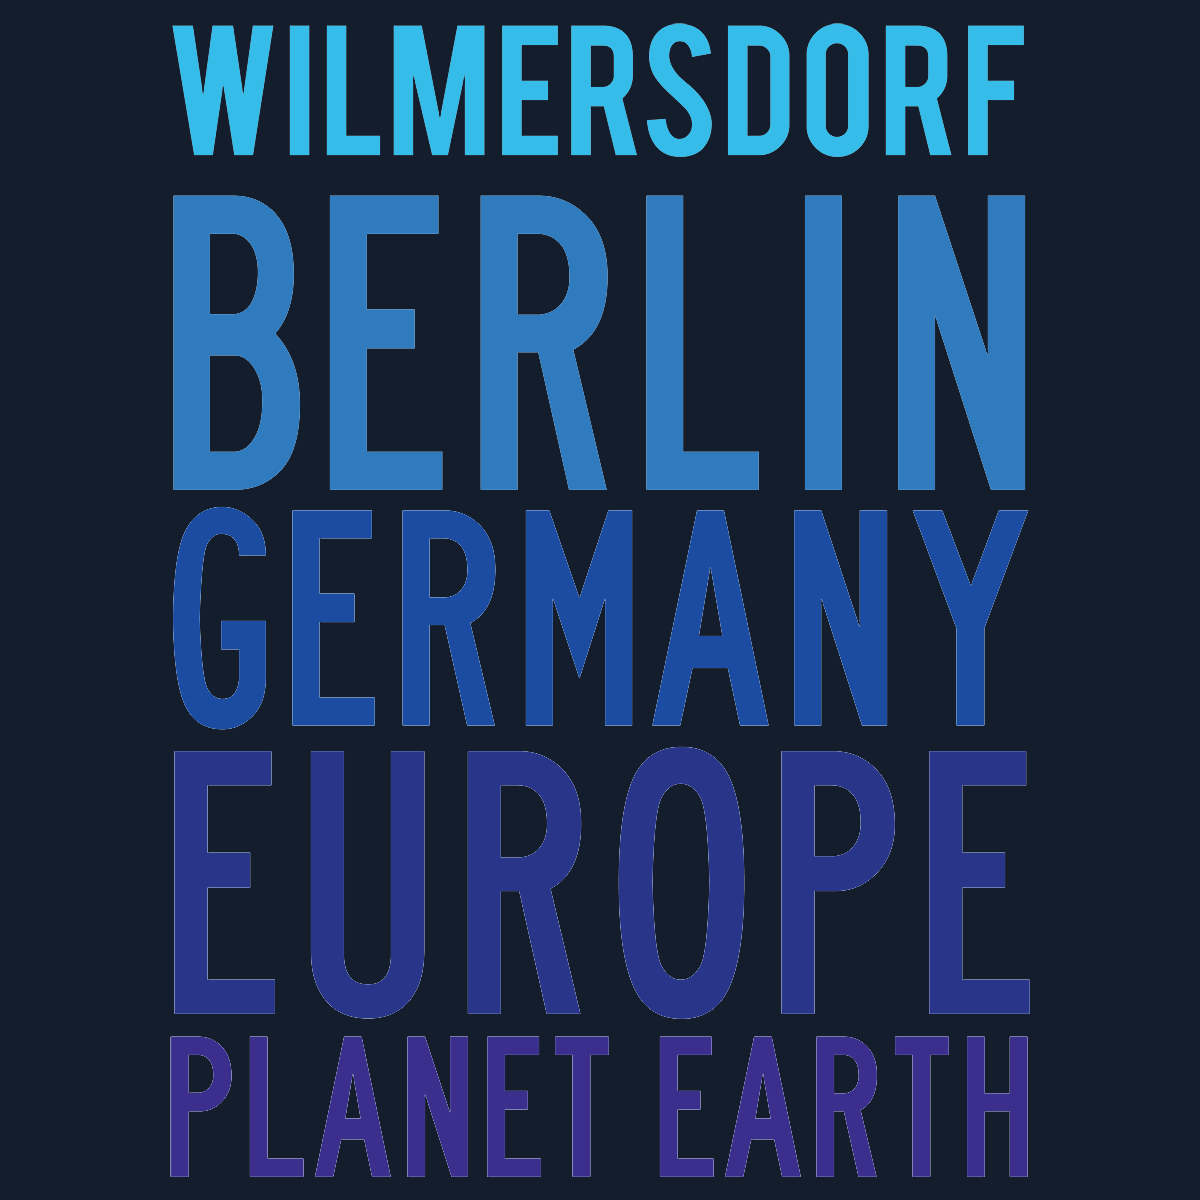 Wilmersdorf Planet Earth